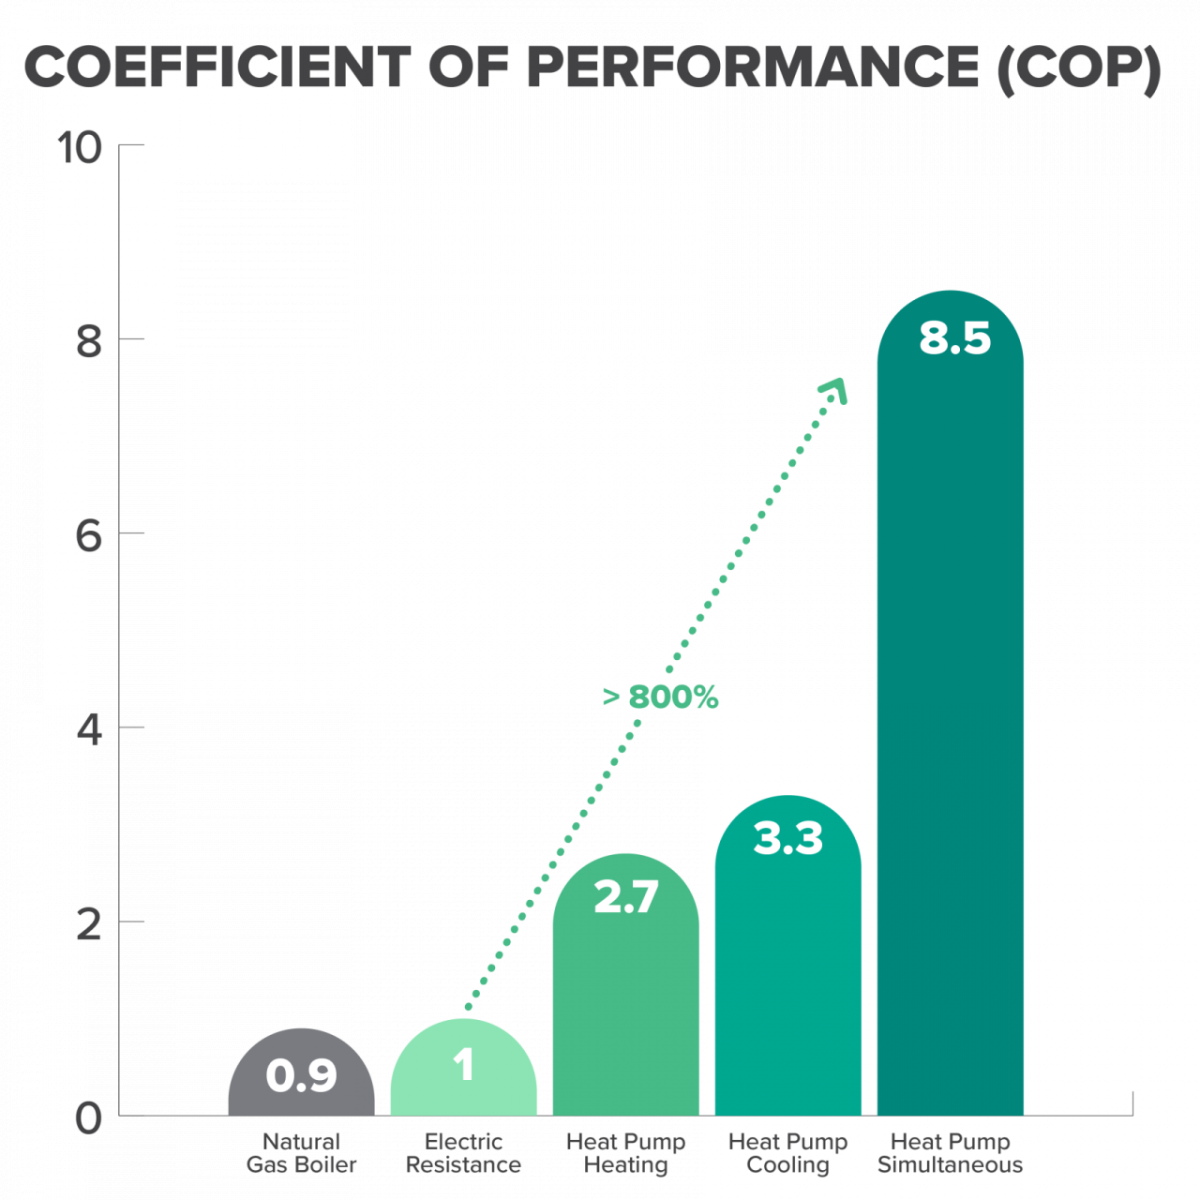 Bar graph "Coefficient of performance (cop)"